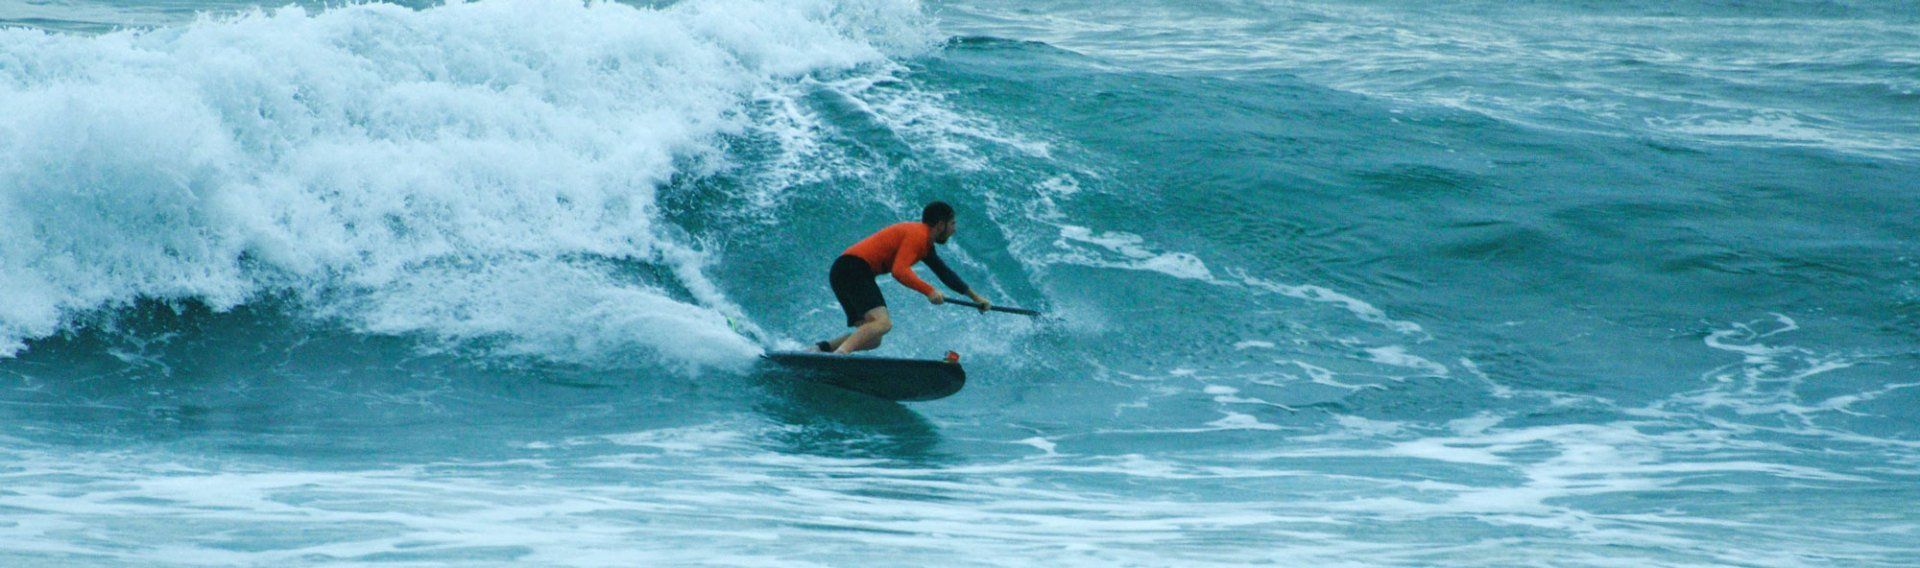 hypr hawaii board surfing bali swell